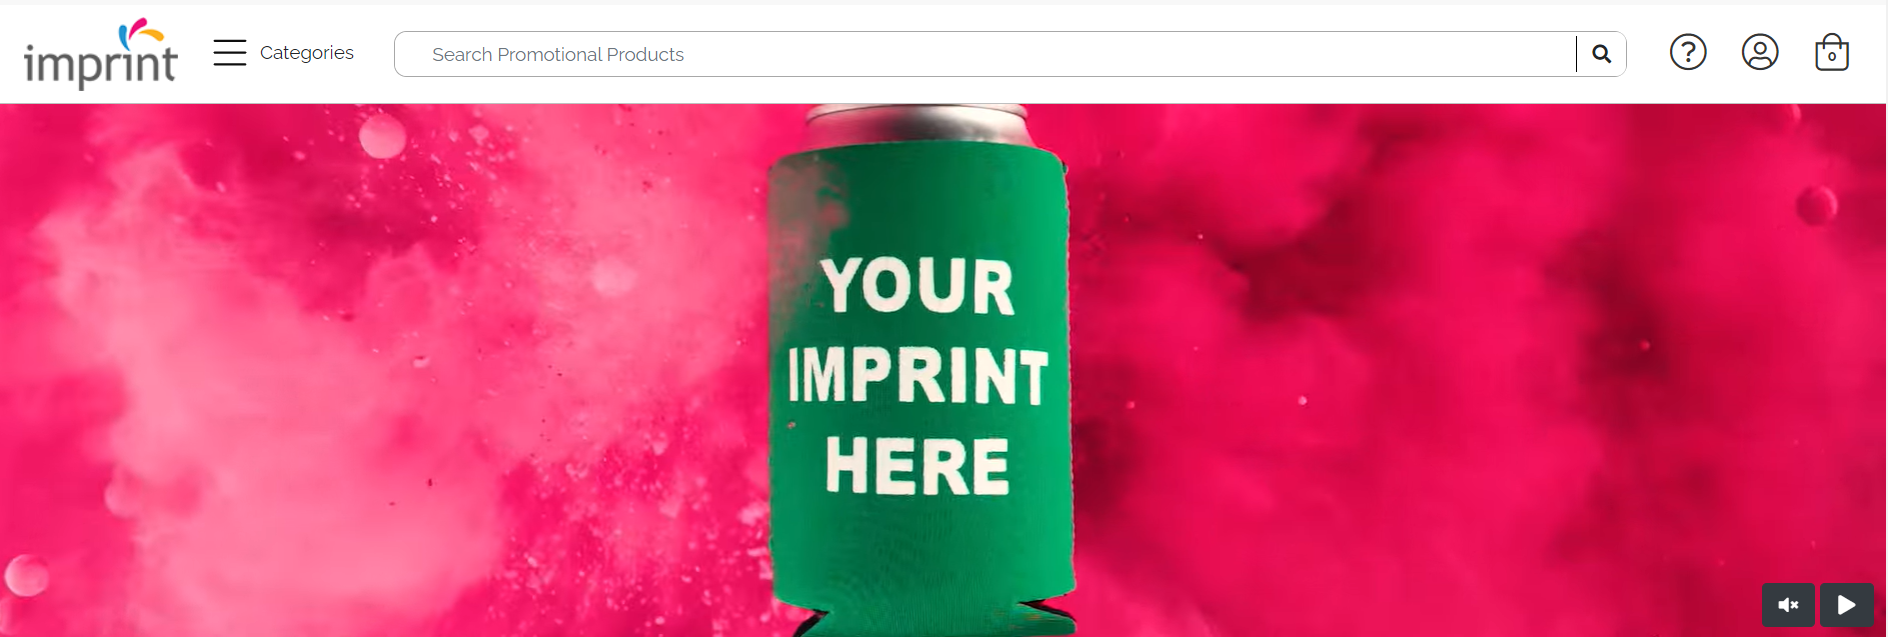 imprint website